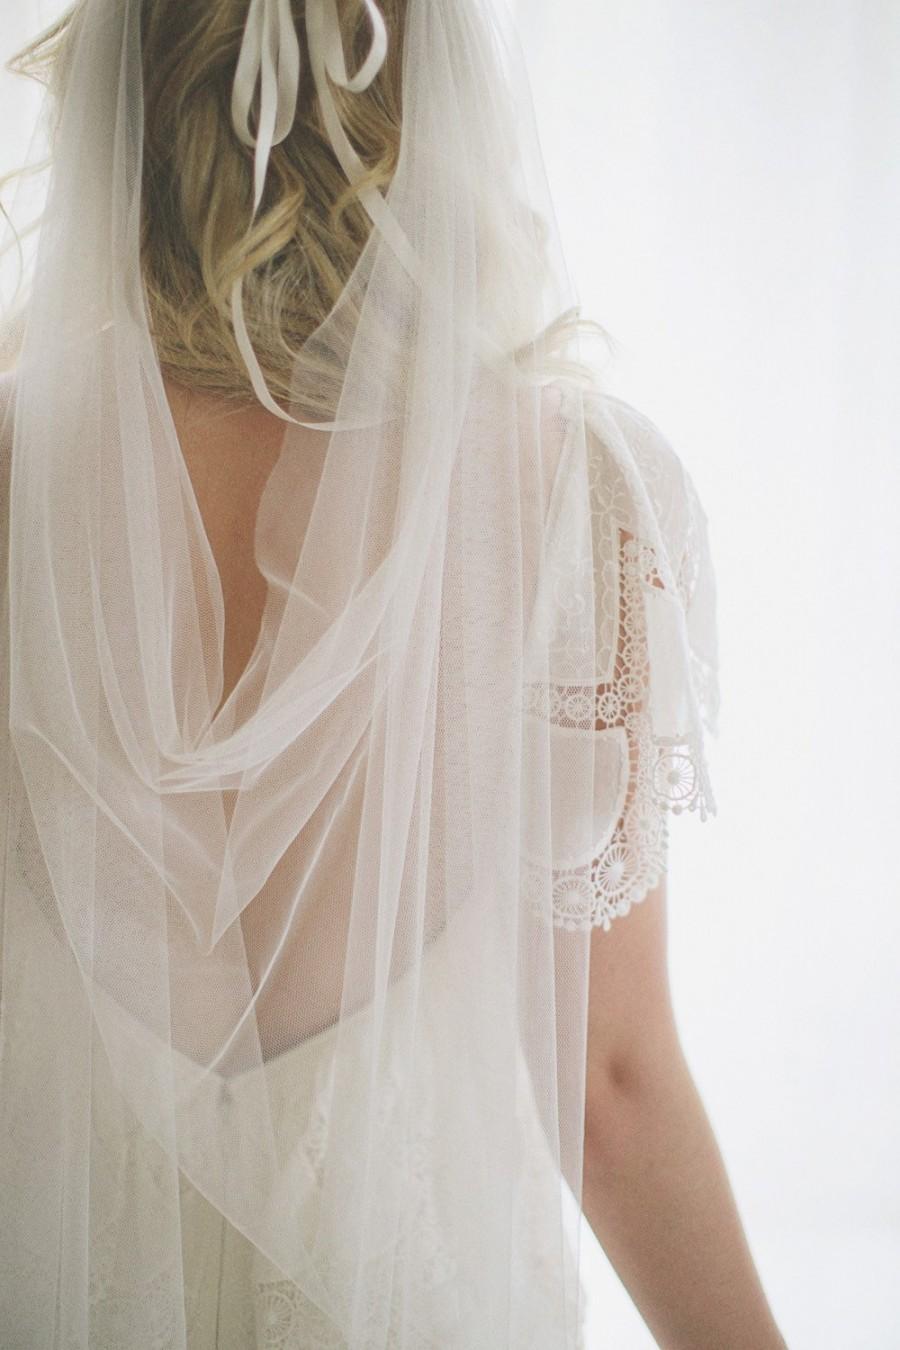 Hochzeit - Draped veil - SALE limited time only ! Marianna ivory veil, drape veil, tulle veil, wedding, bridal veil